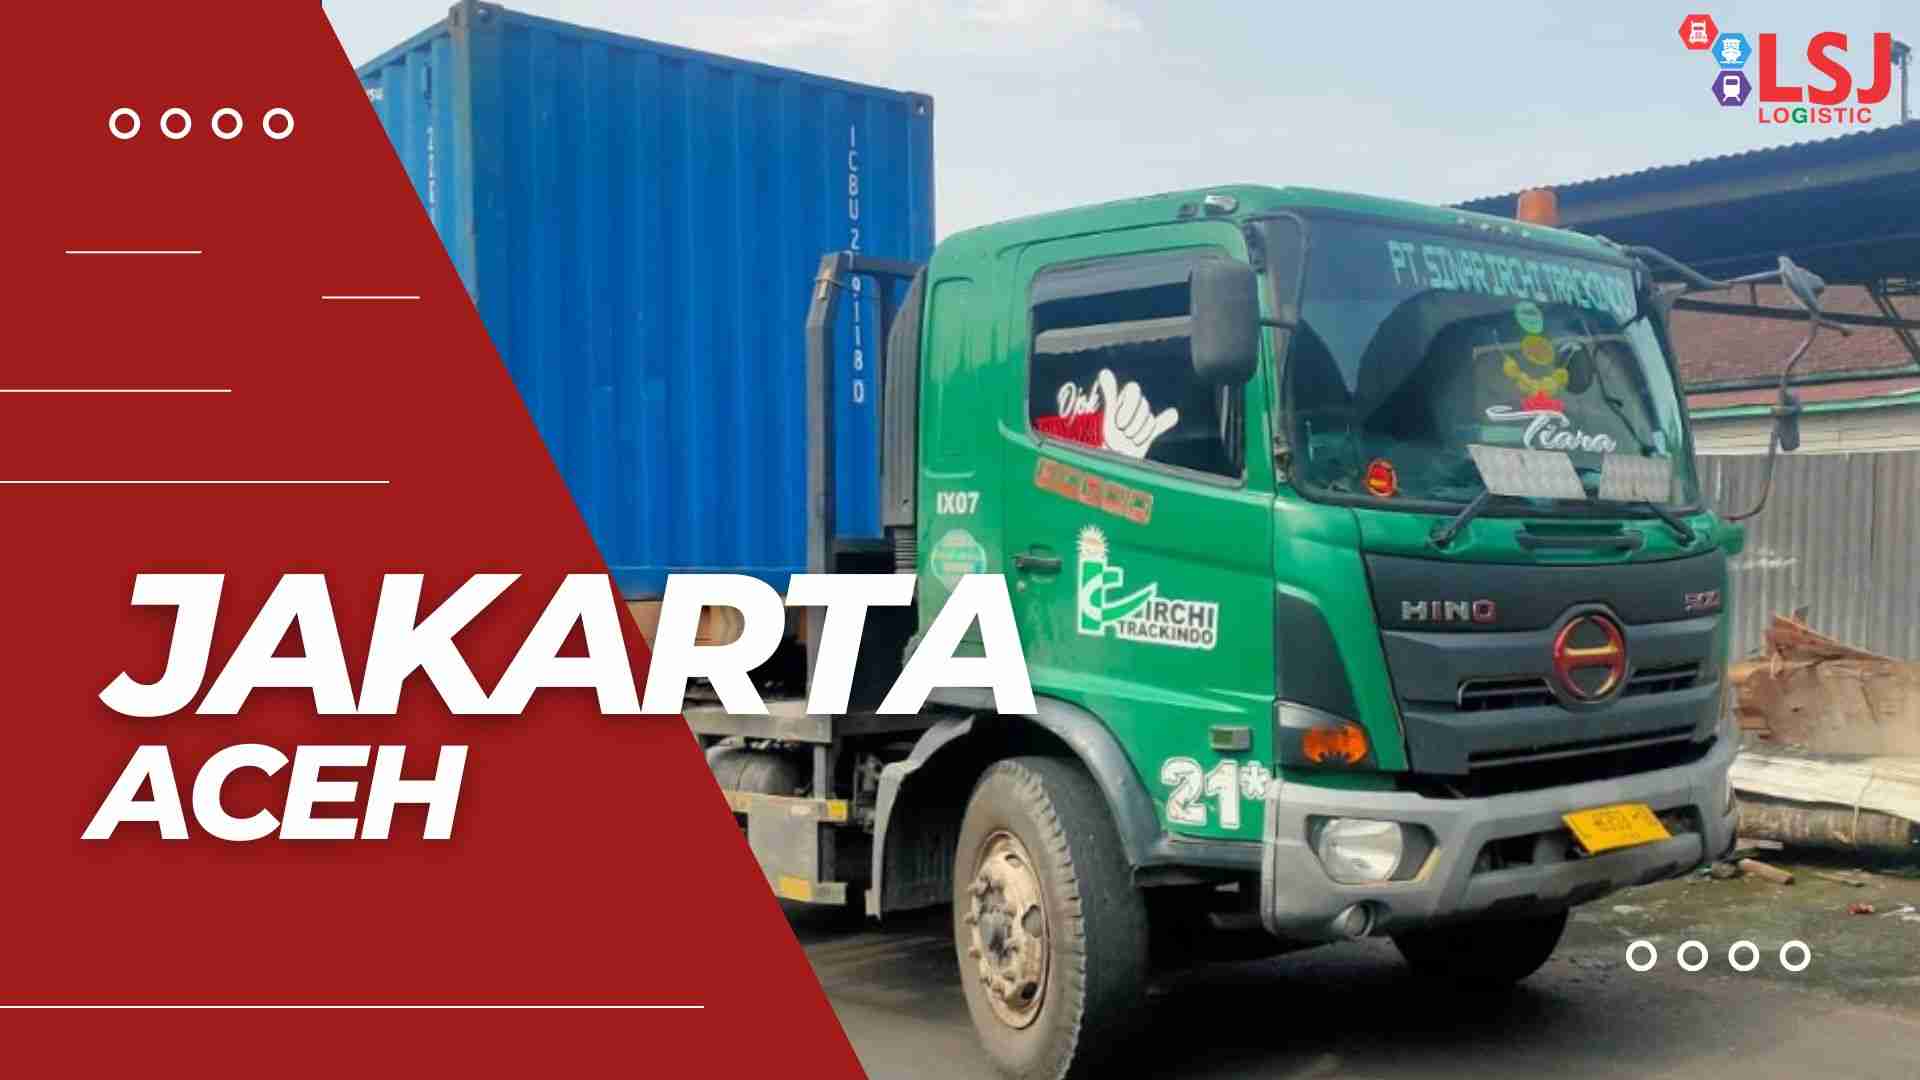 Ekspedisi Container Jakarta Aceh